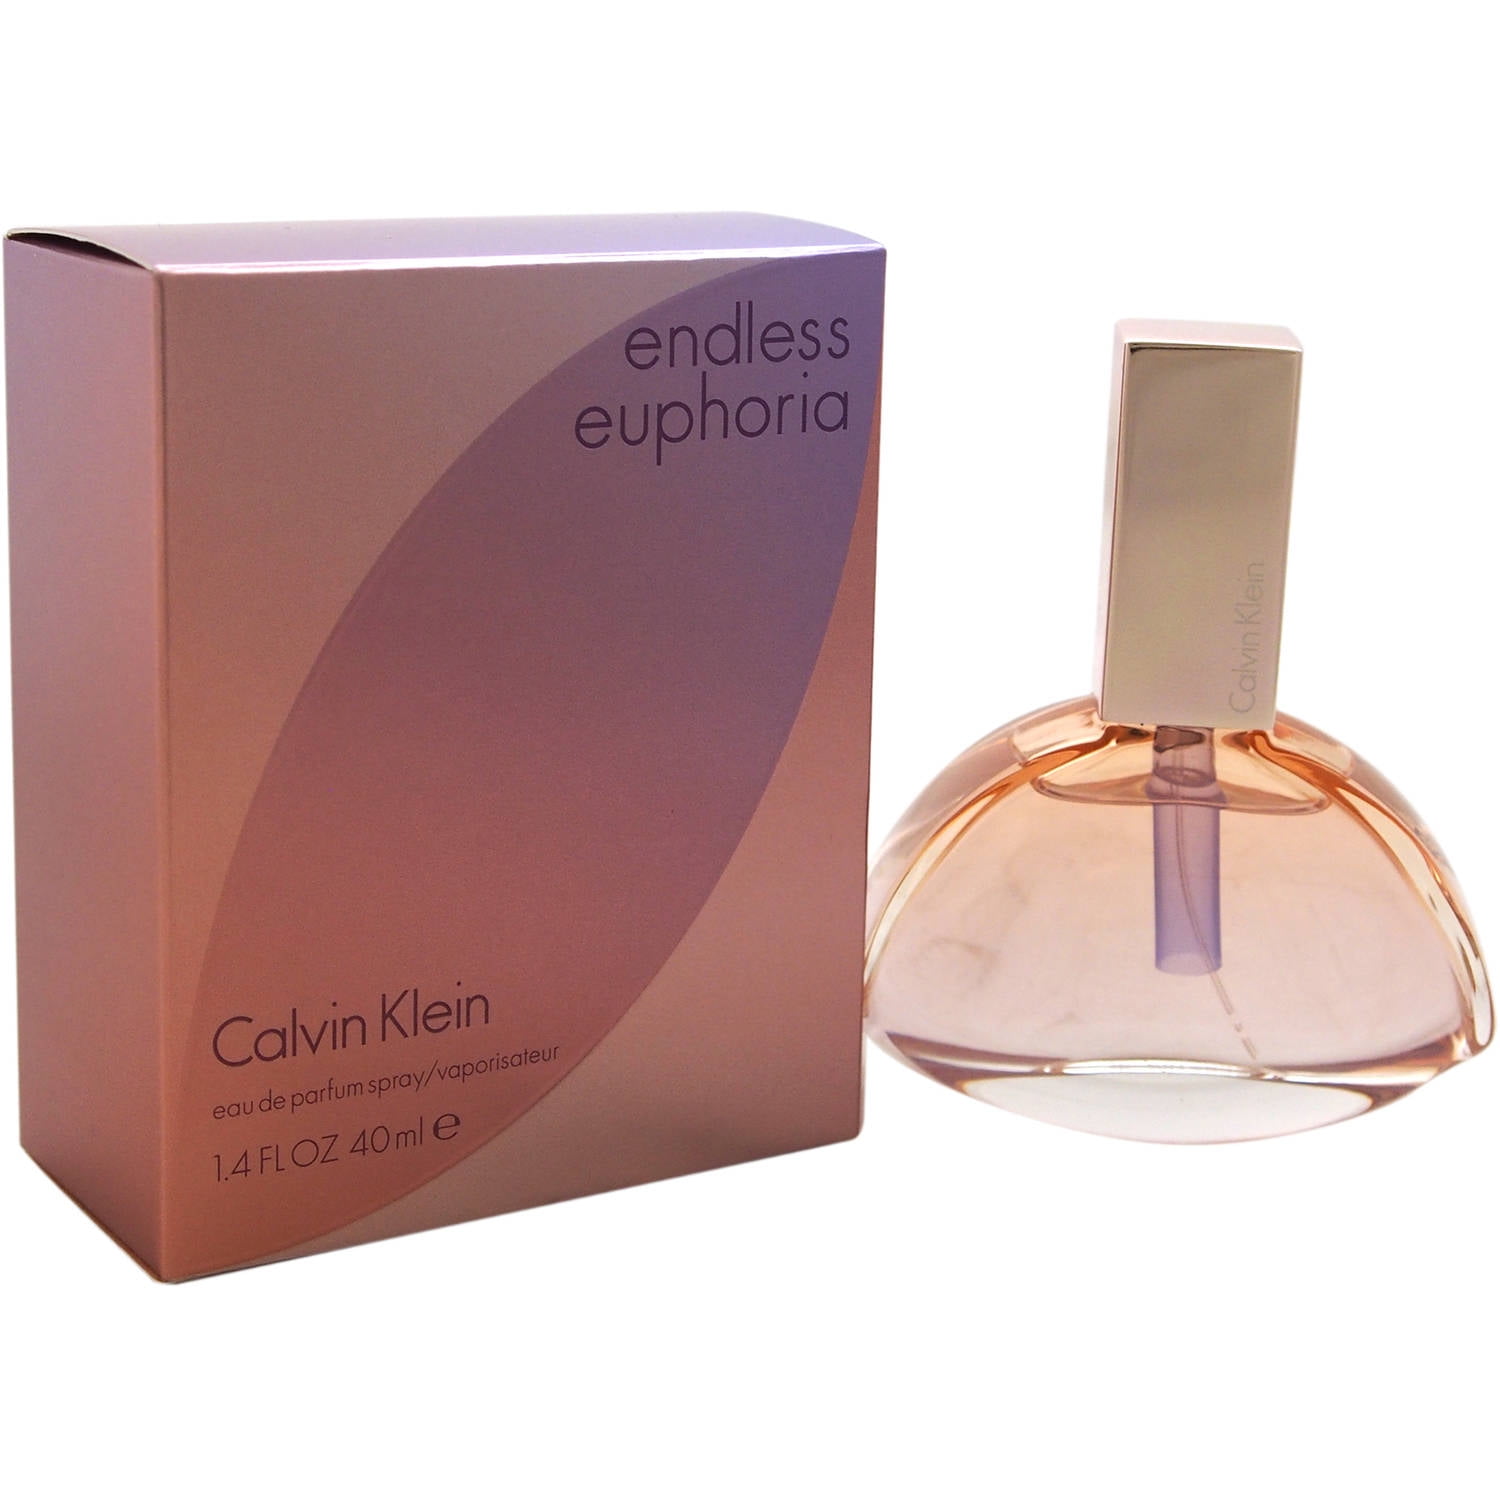 Calvin Klein Endless Euphoria Eau de Parfum, Perfume for Women,  Oz Full  Size 